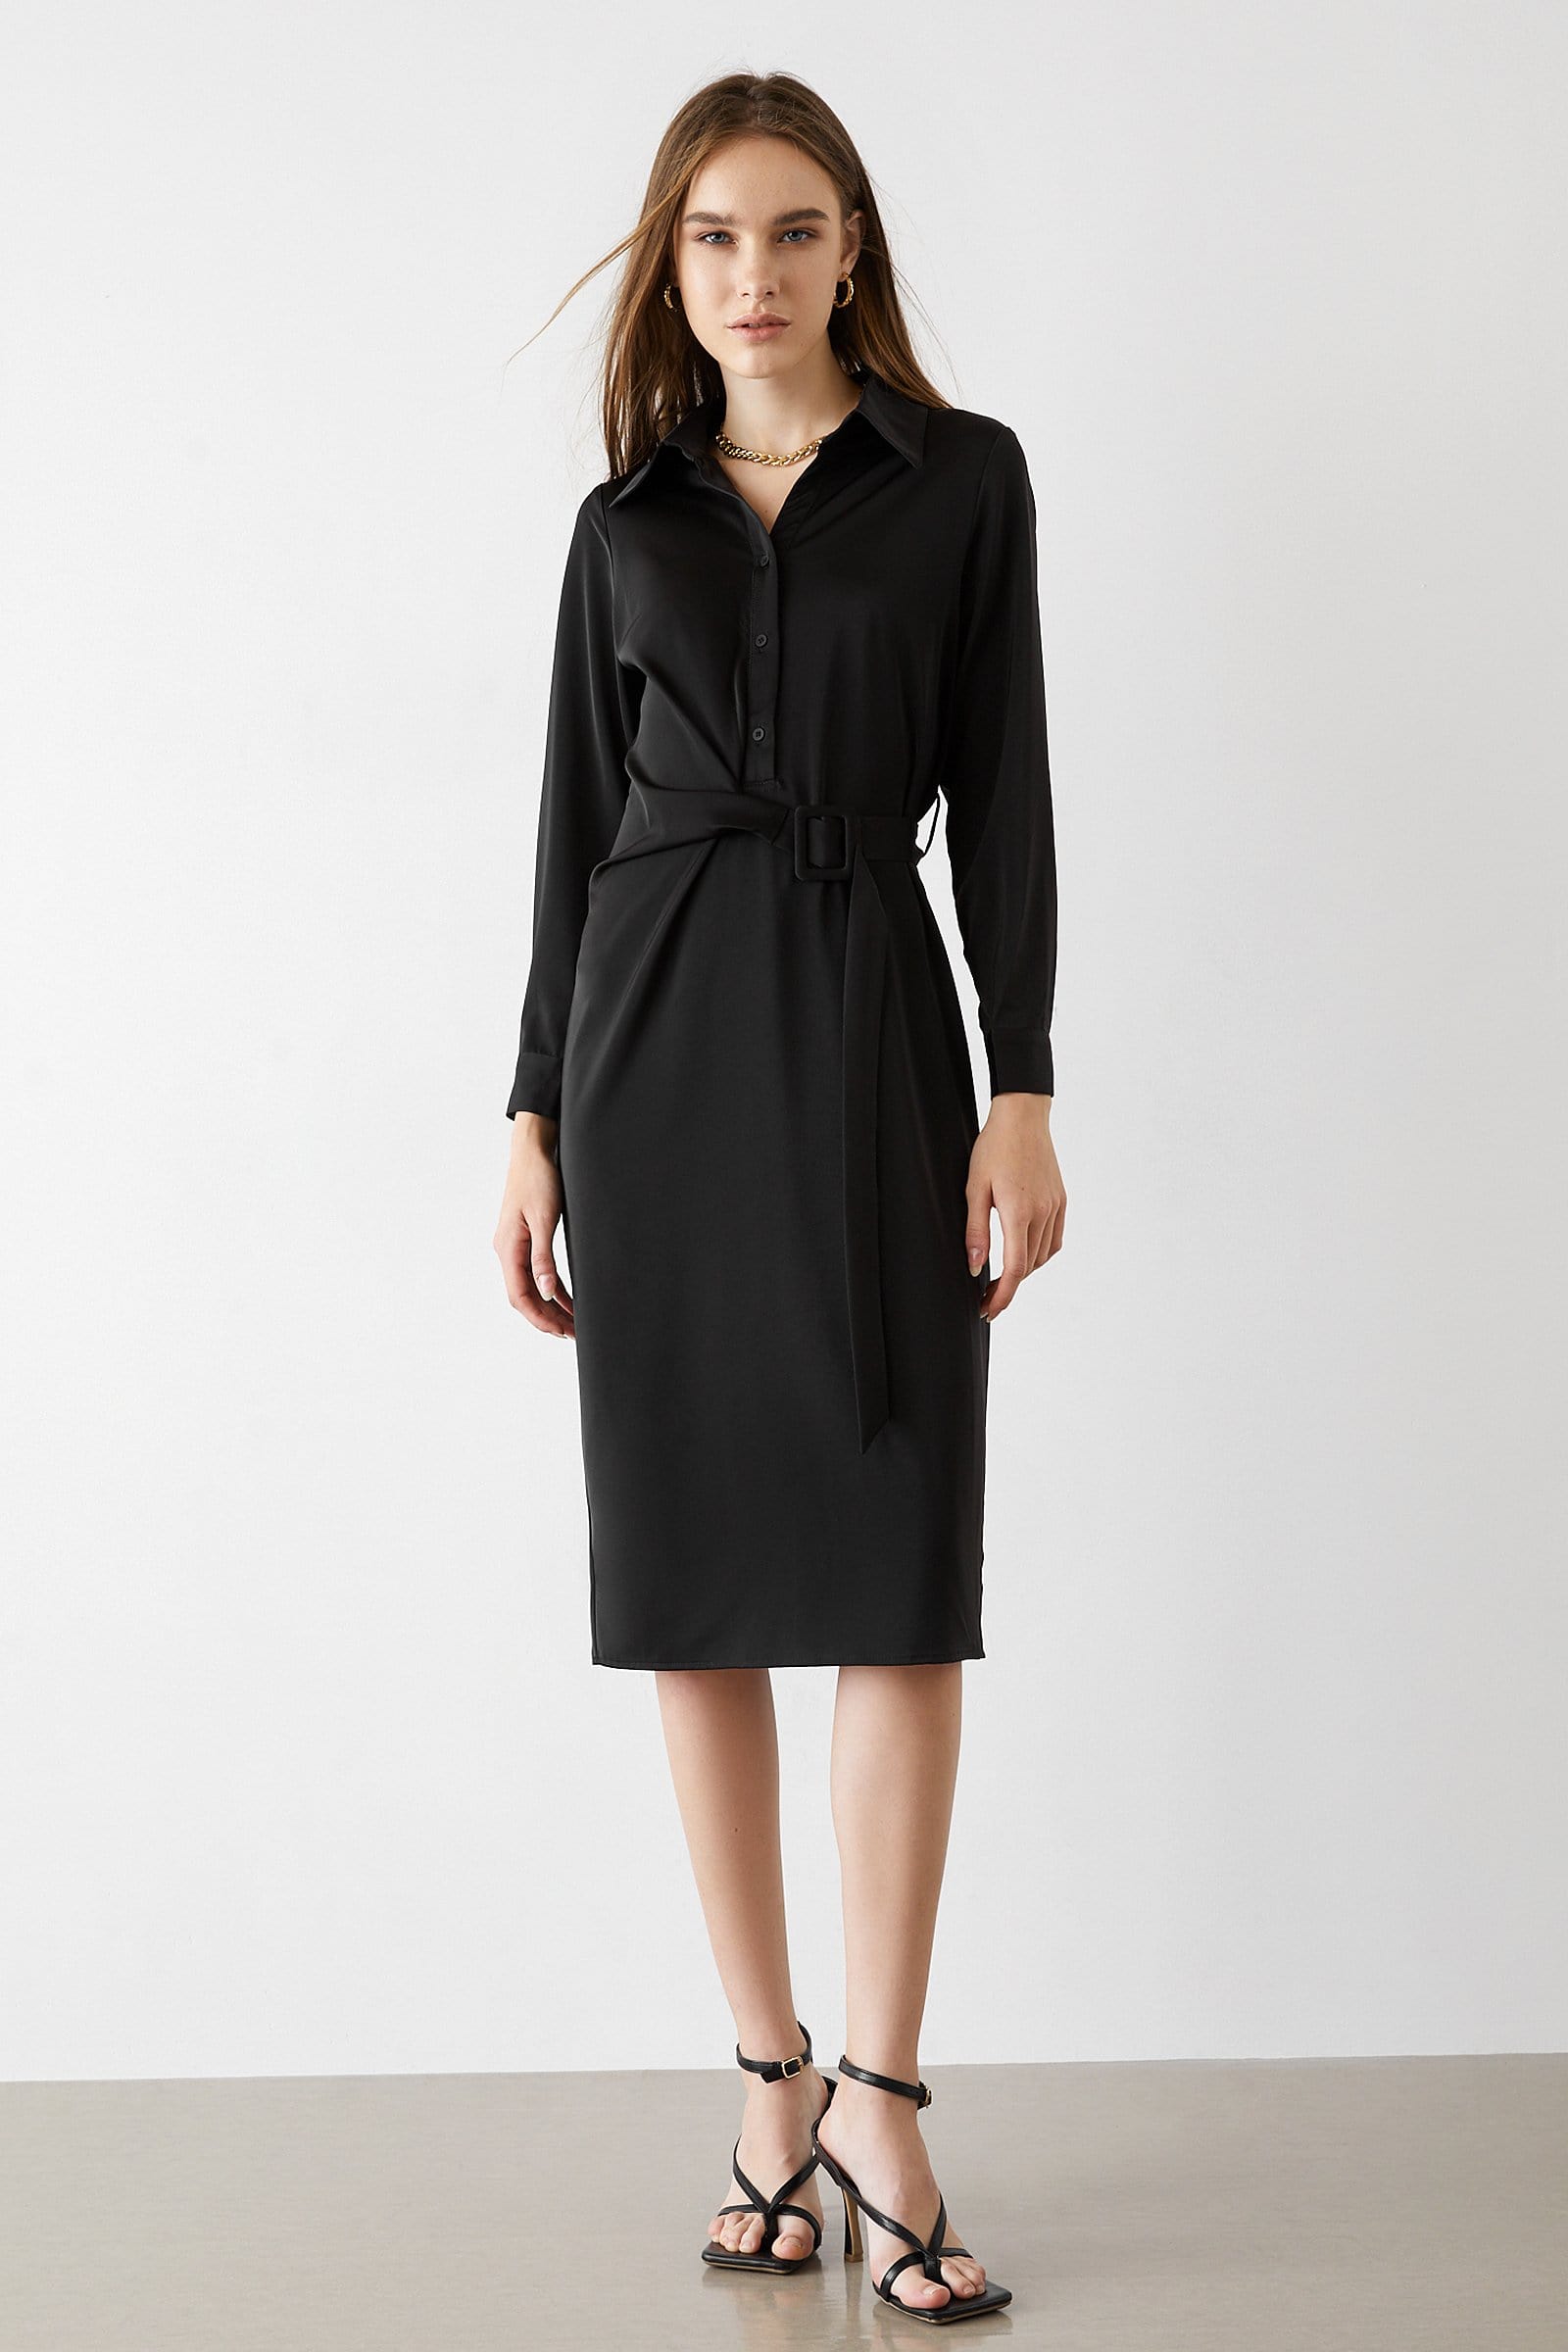 Allegra Black Self-Tie Midi Dress